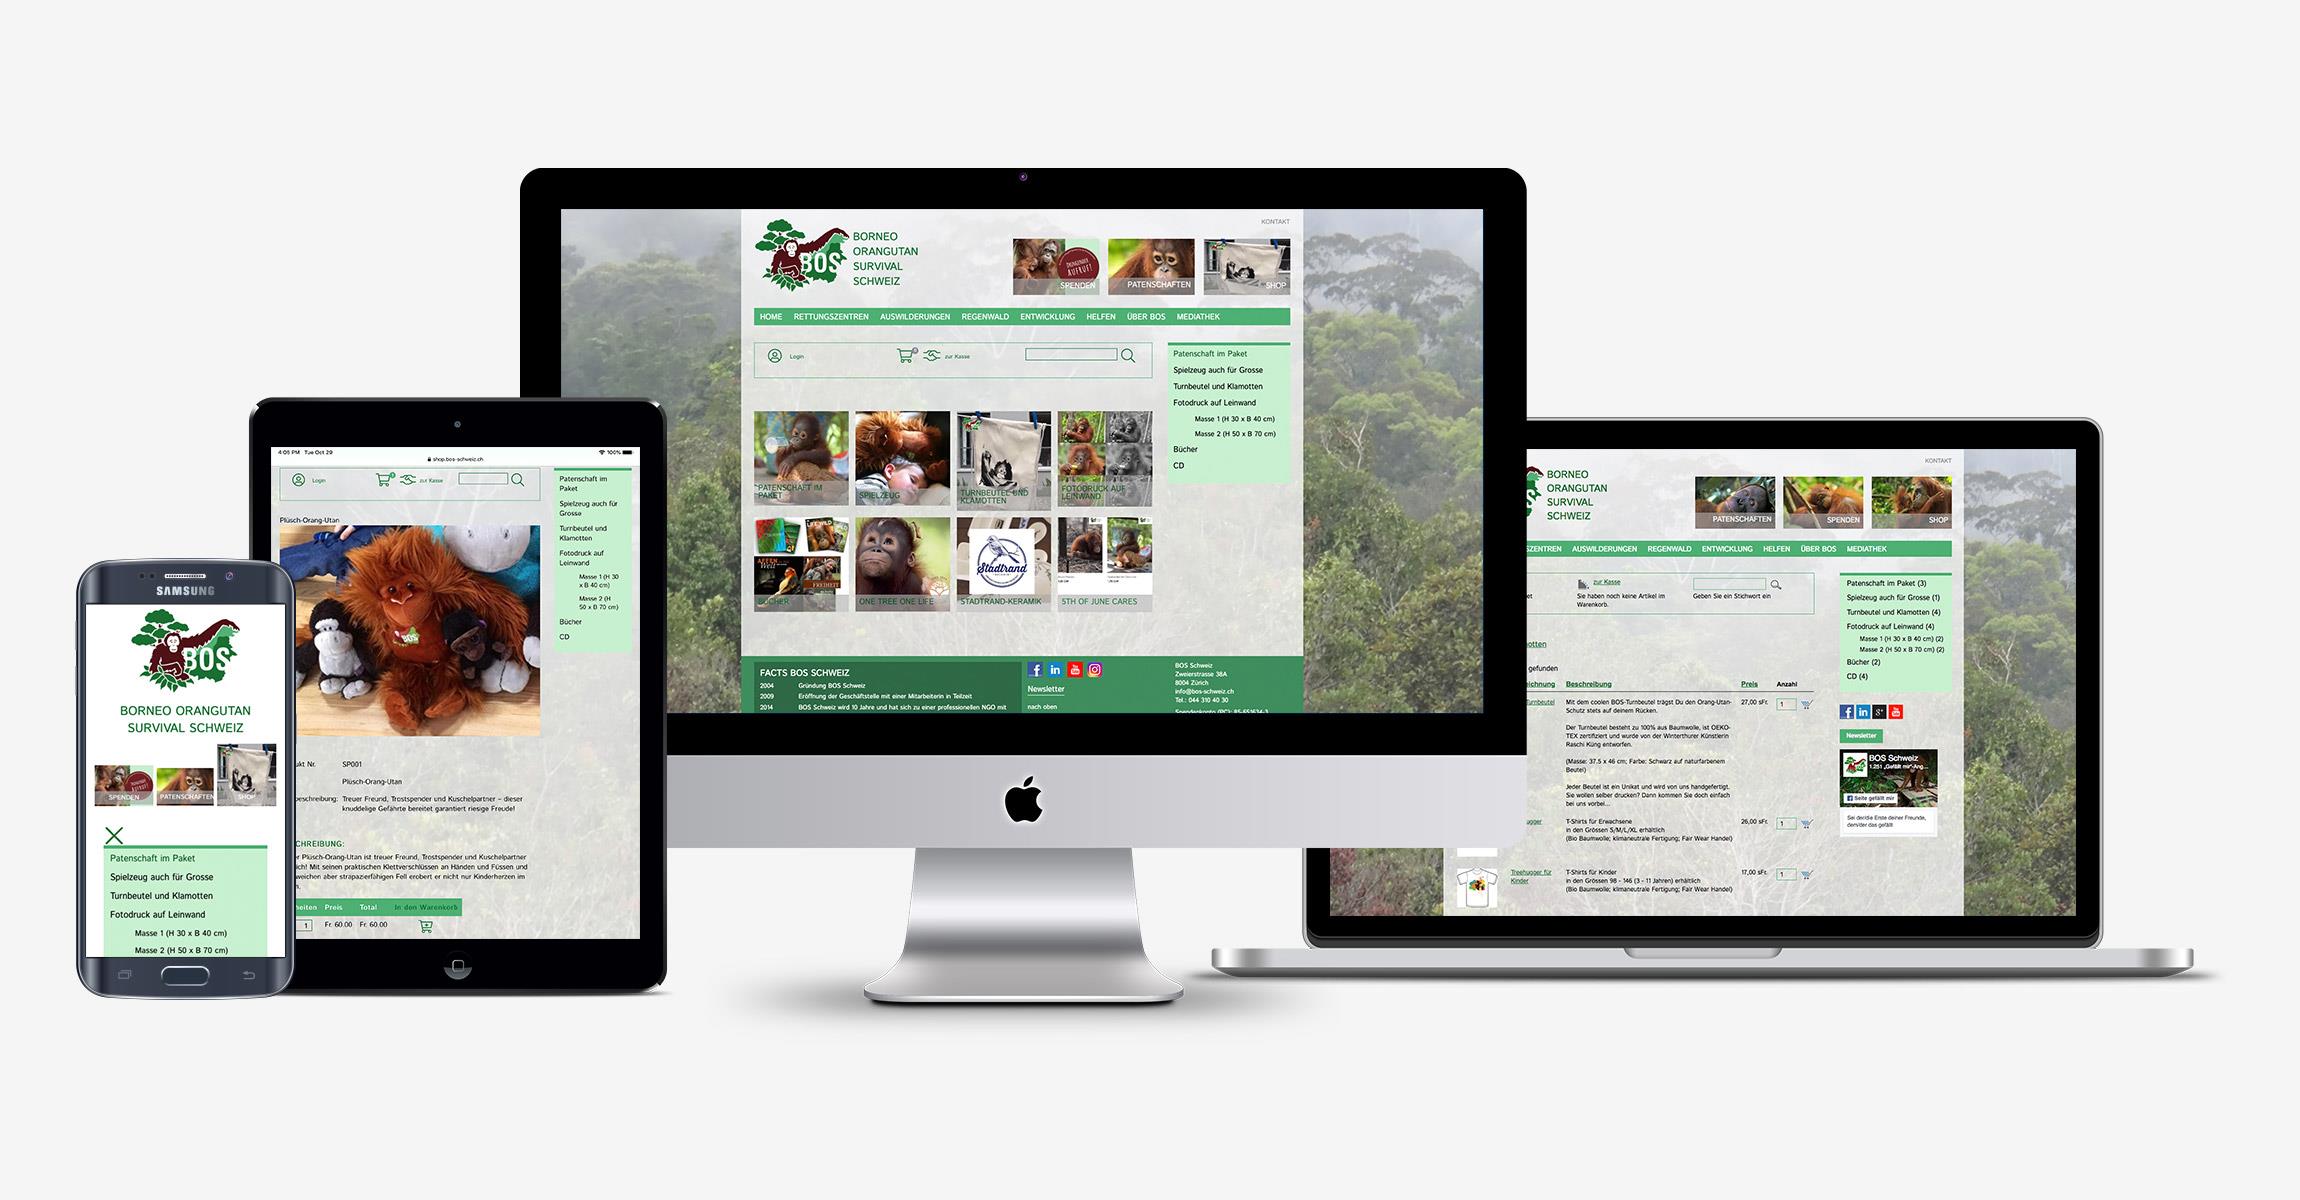 Online Shop Borneo Orangutan Survival Schweiz